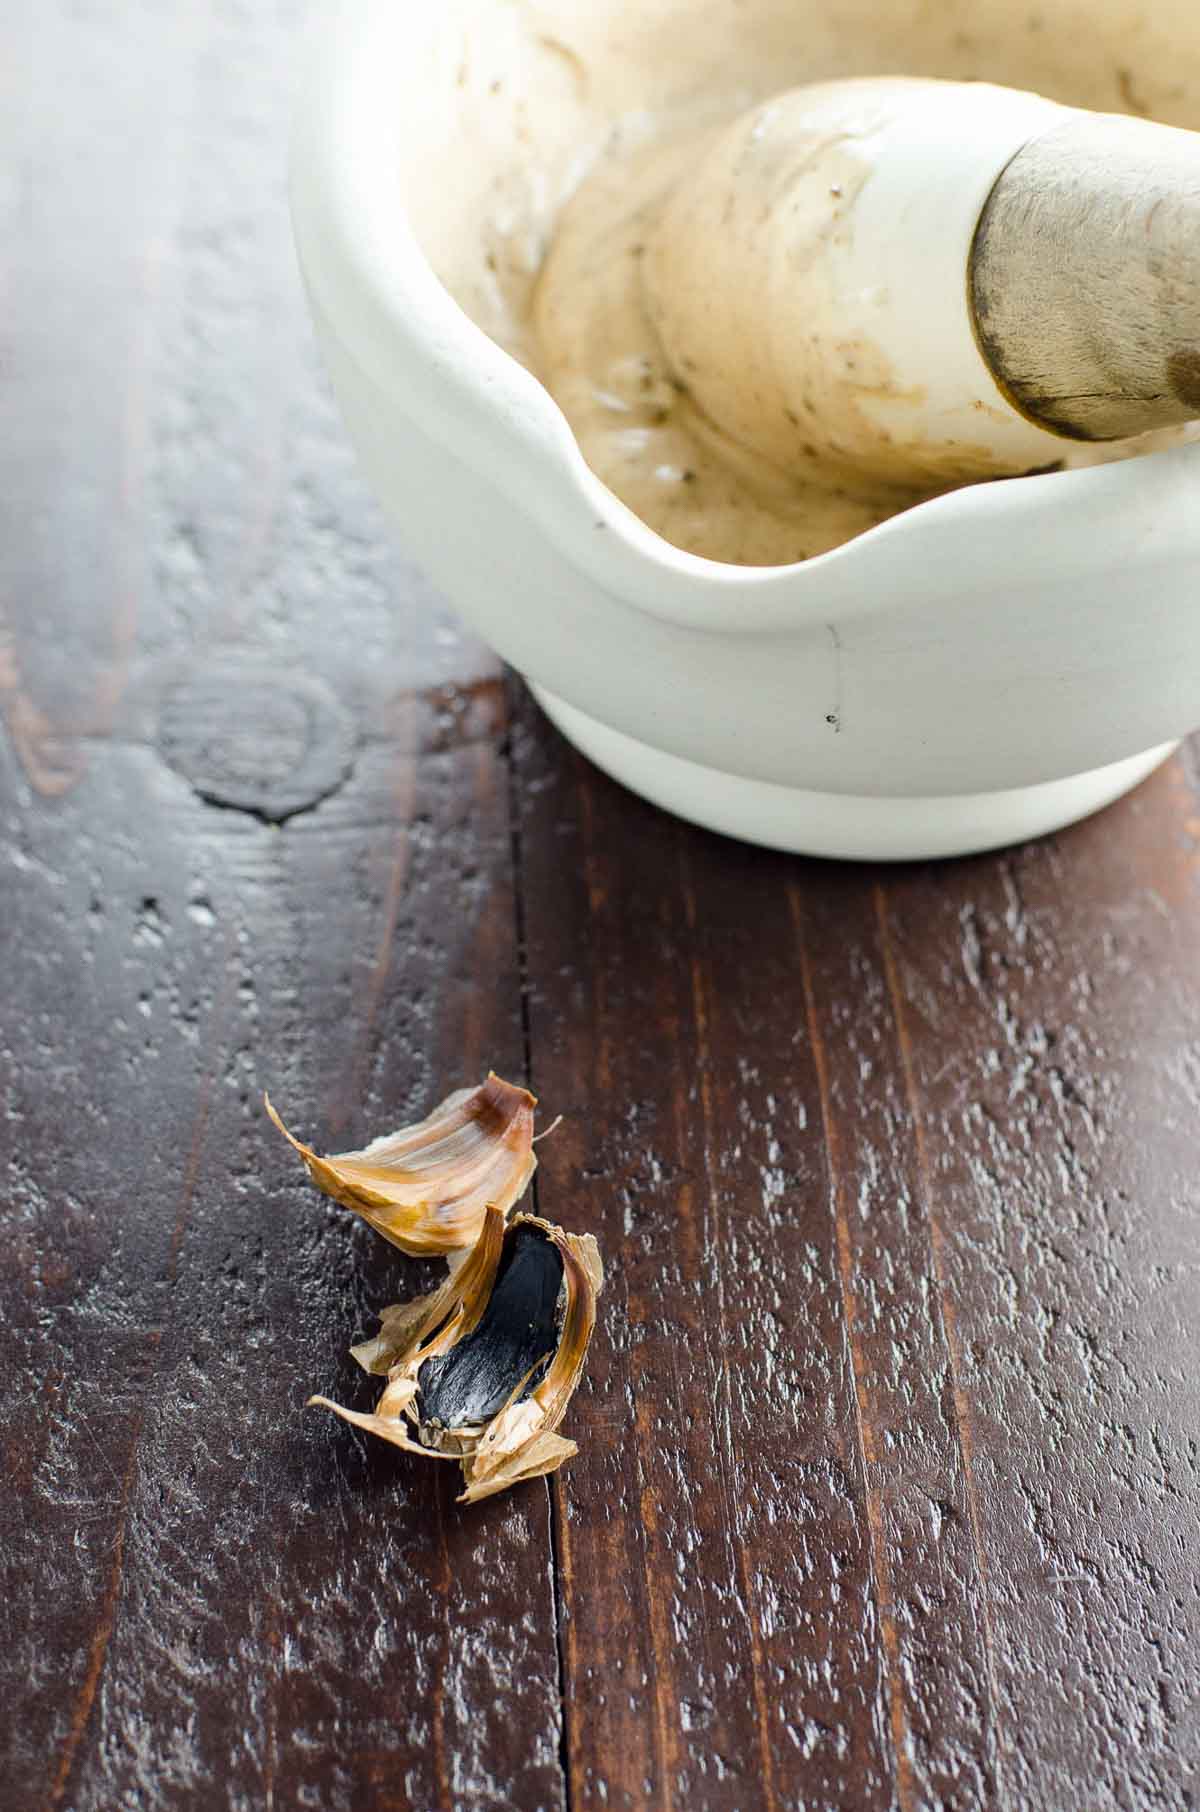 black garlic mayo in a mortar and pestle